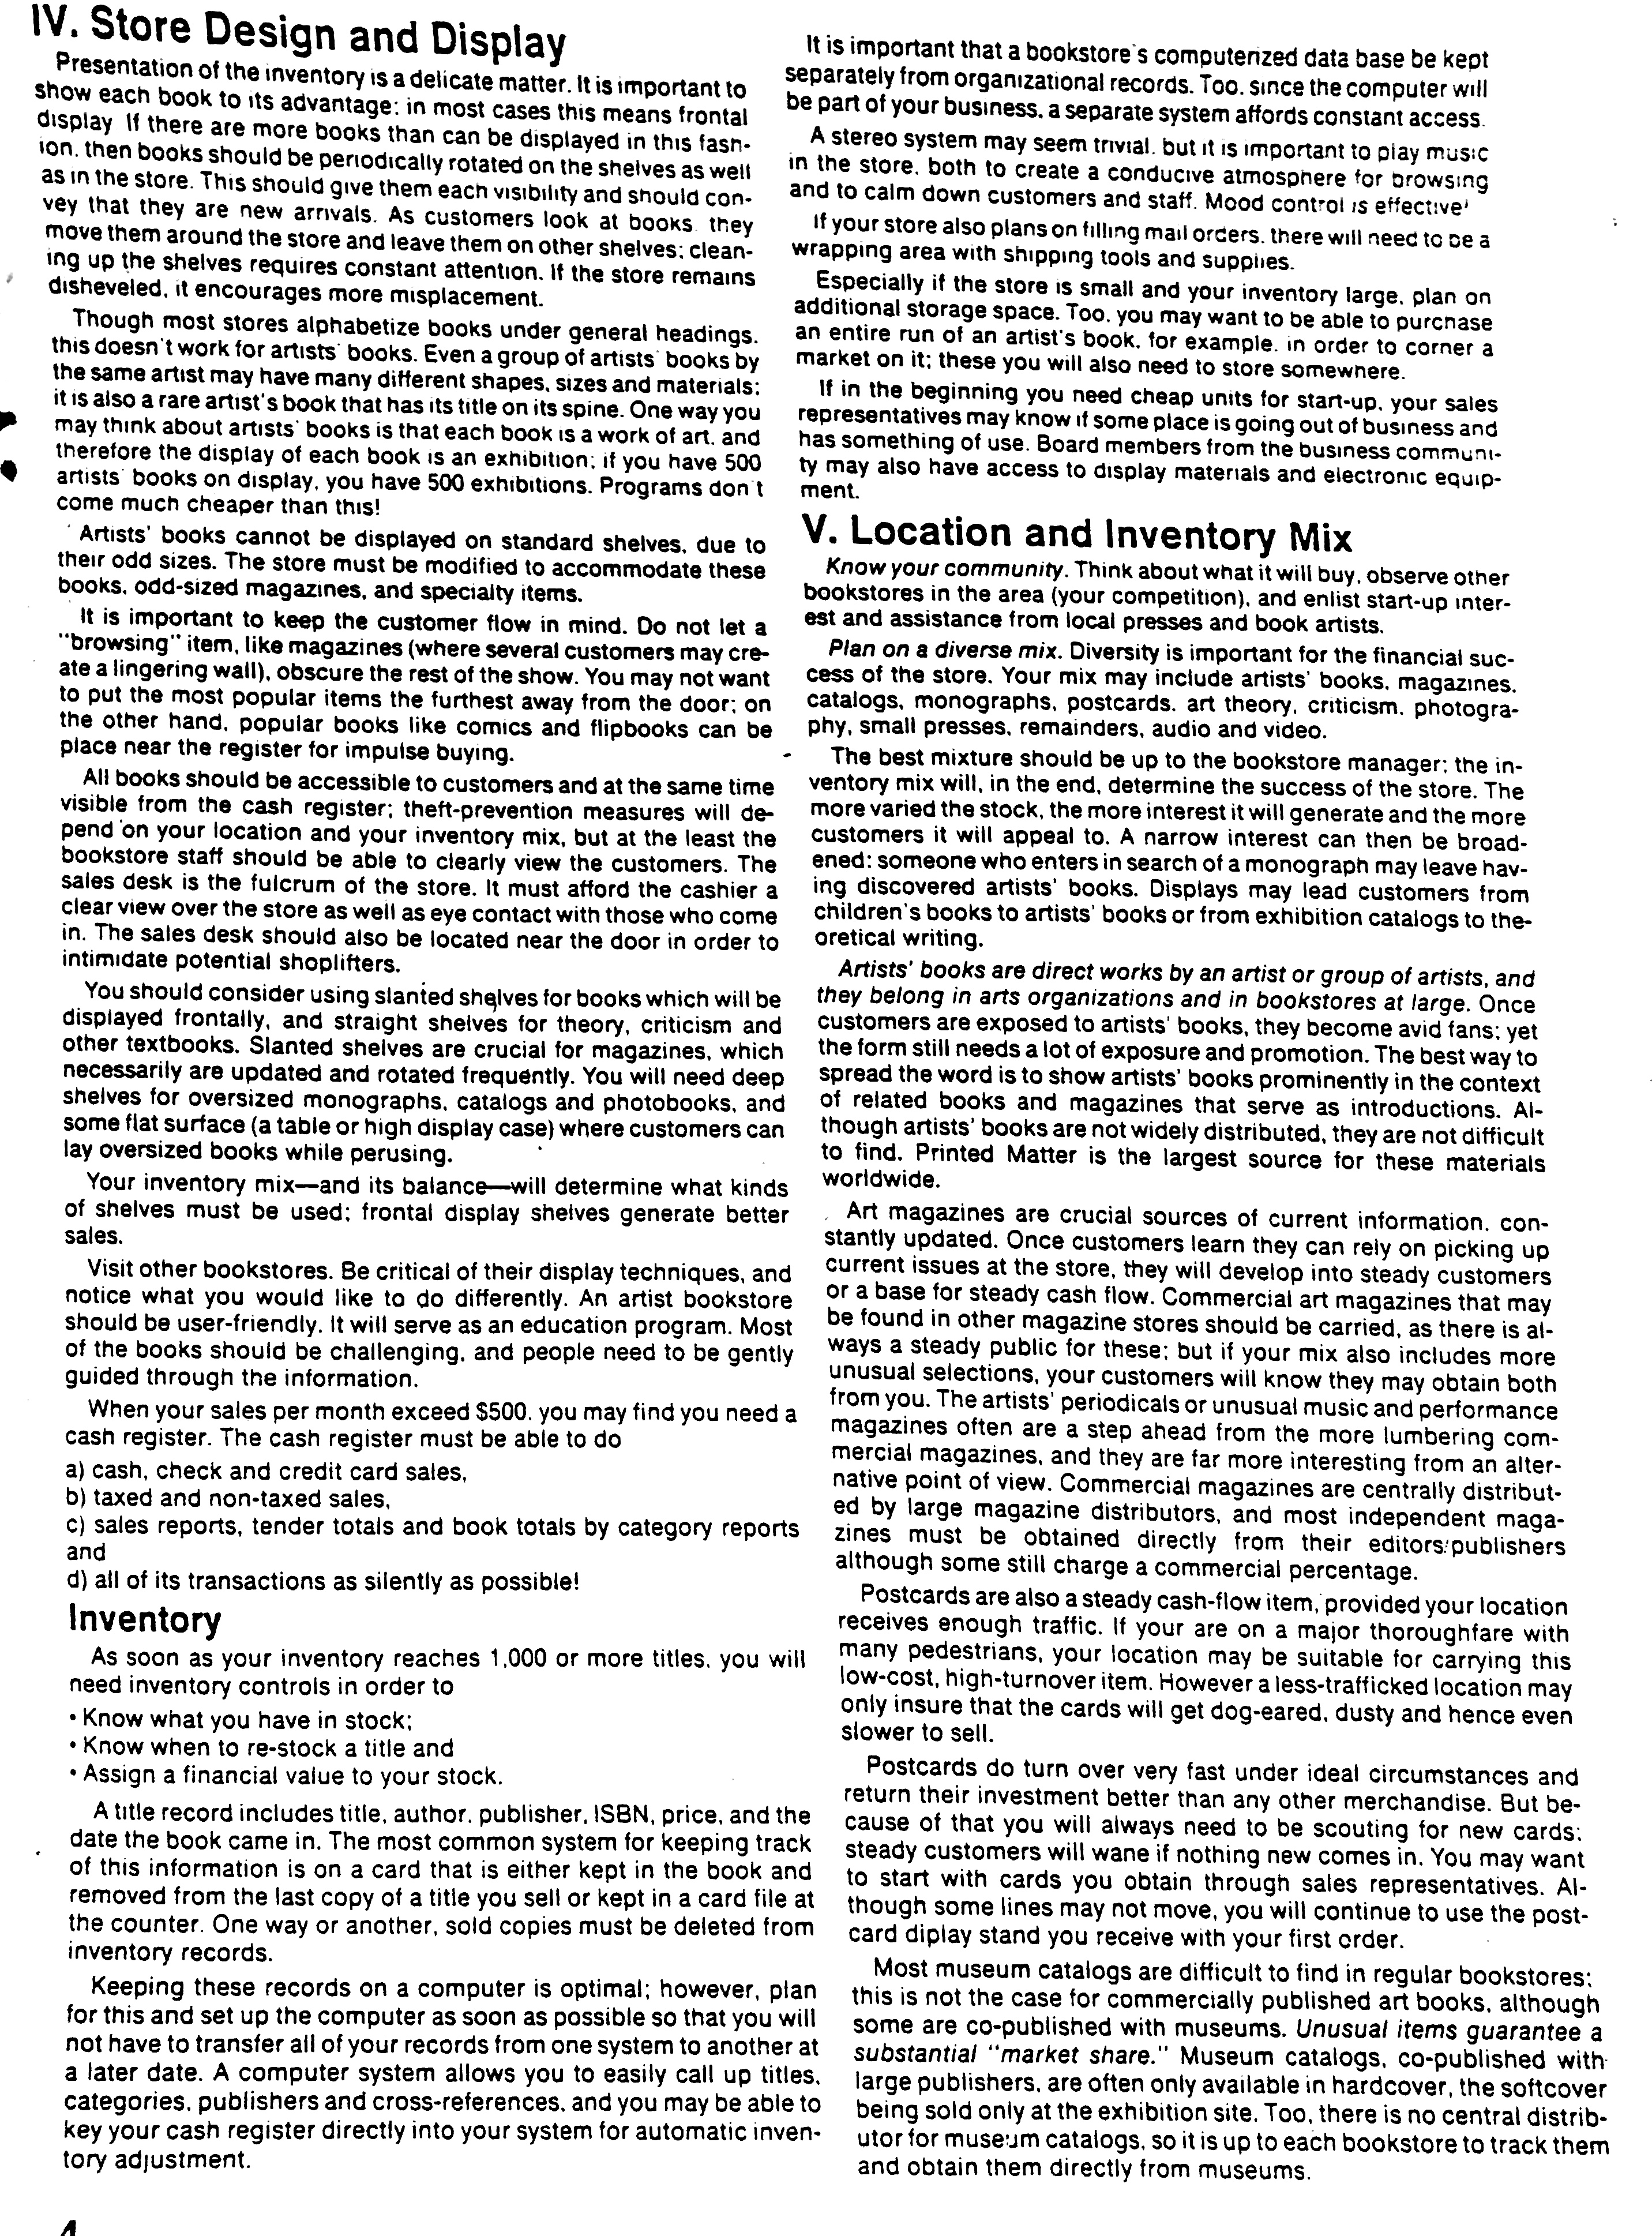 September-October 1987 - NAAO Bulletin Page 4.jpg